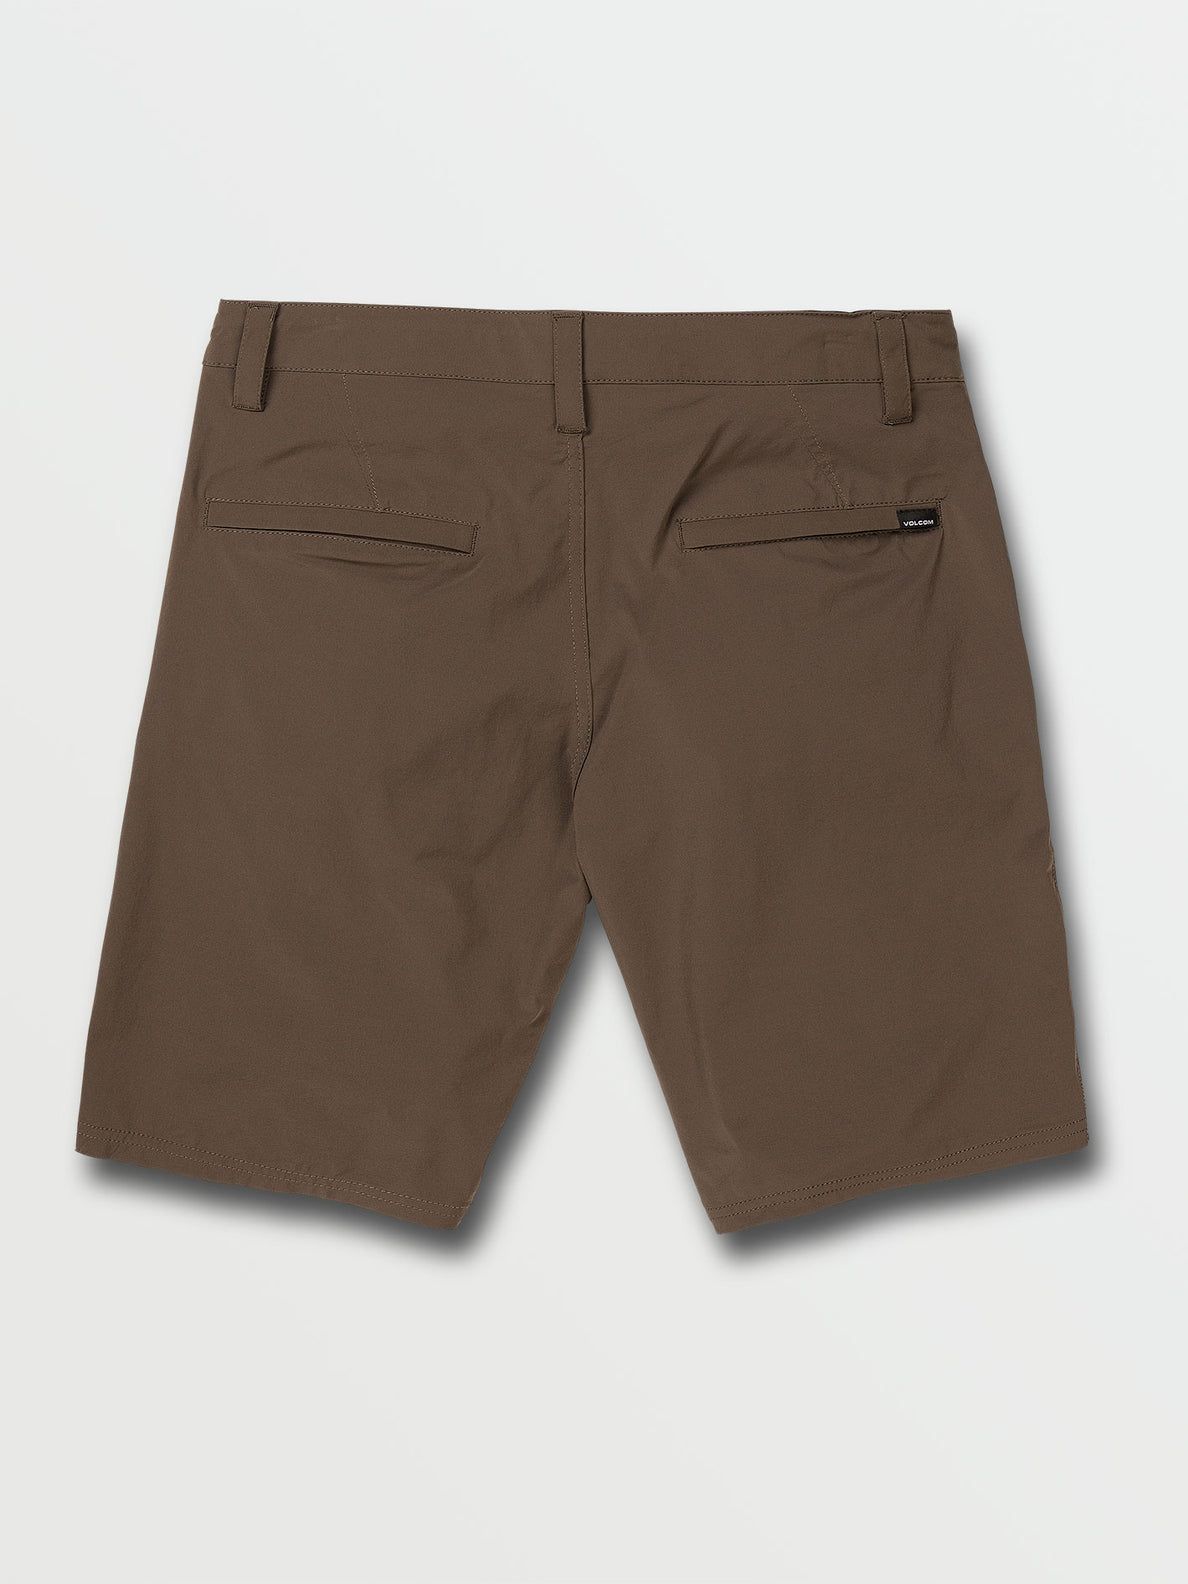 Bohnes Hybrid Shorts - Wren (A3212101_WRE) [B]